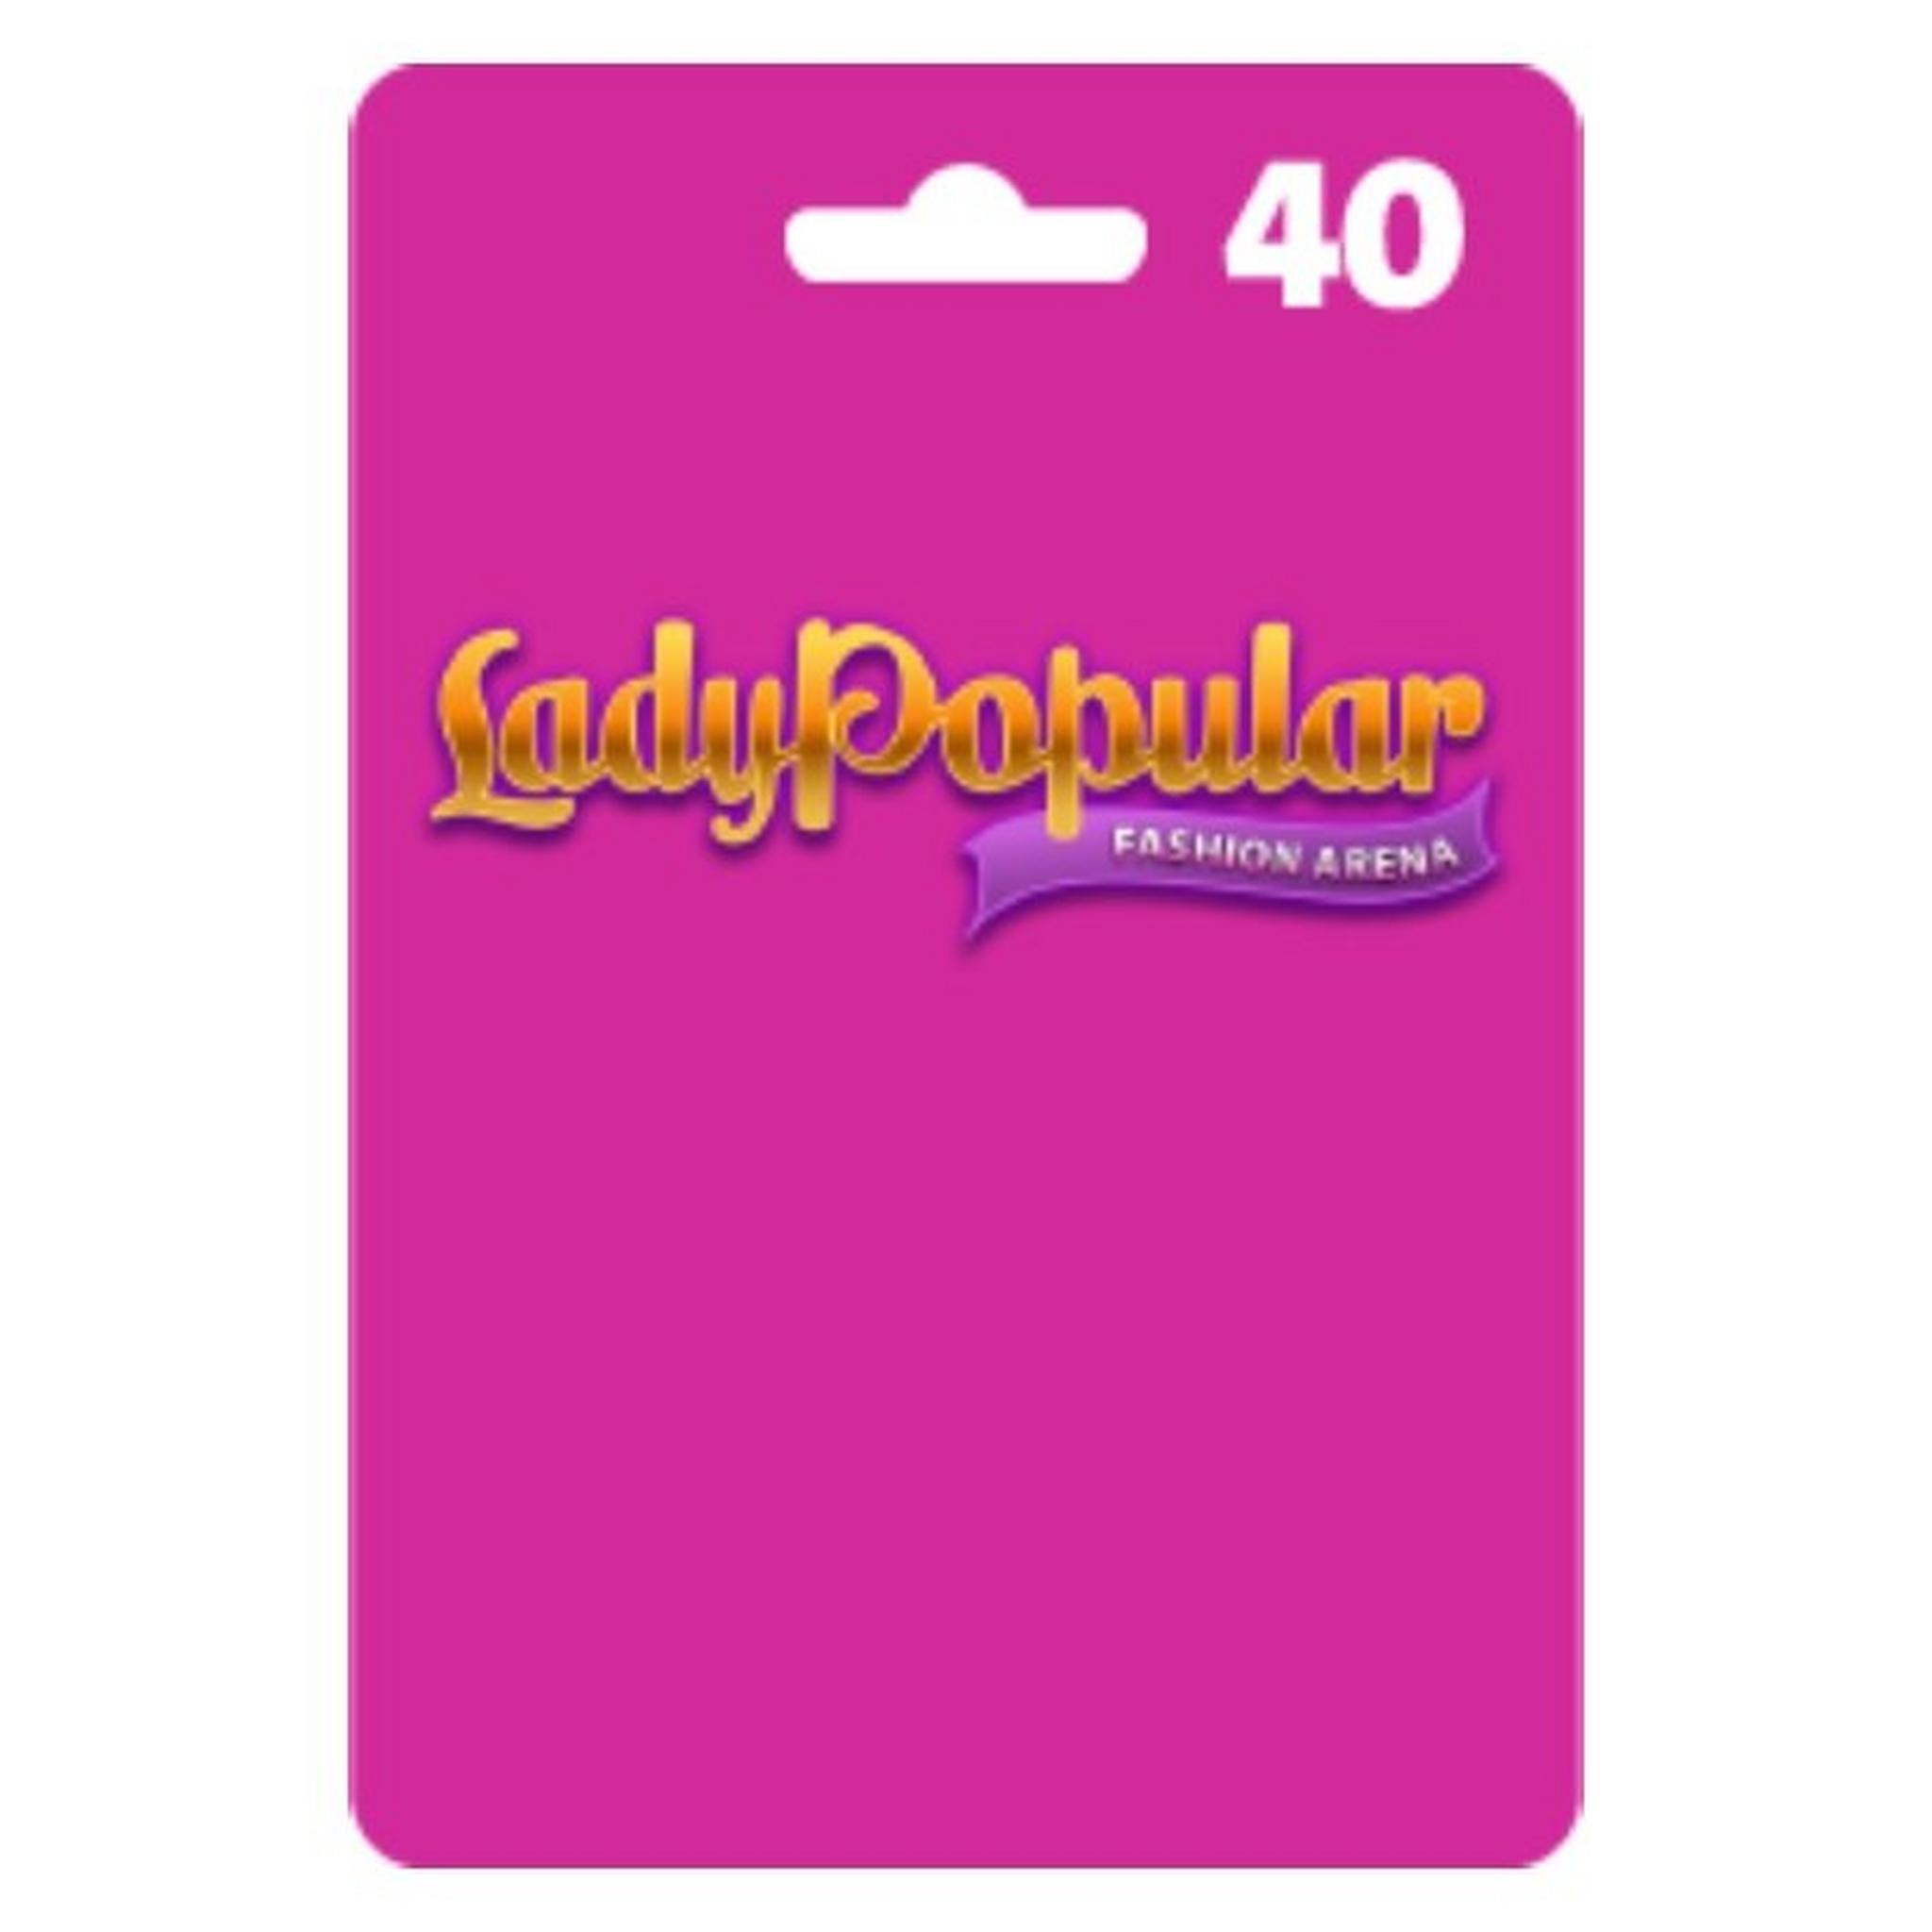 Lady Popular Card 40 Diamonds